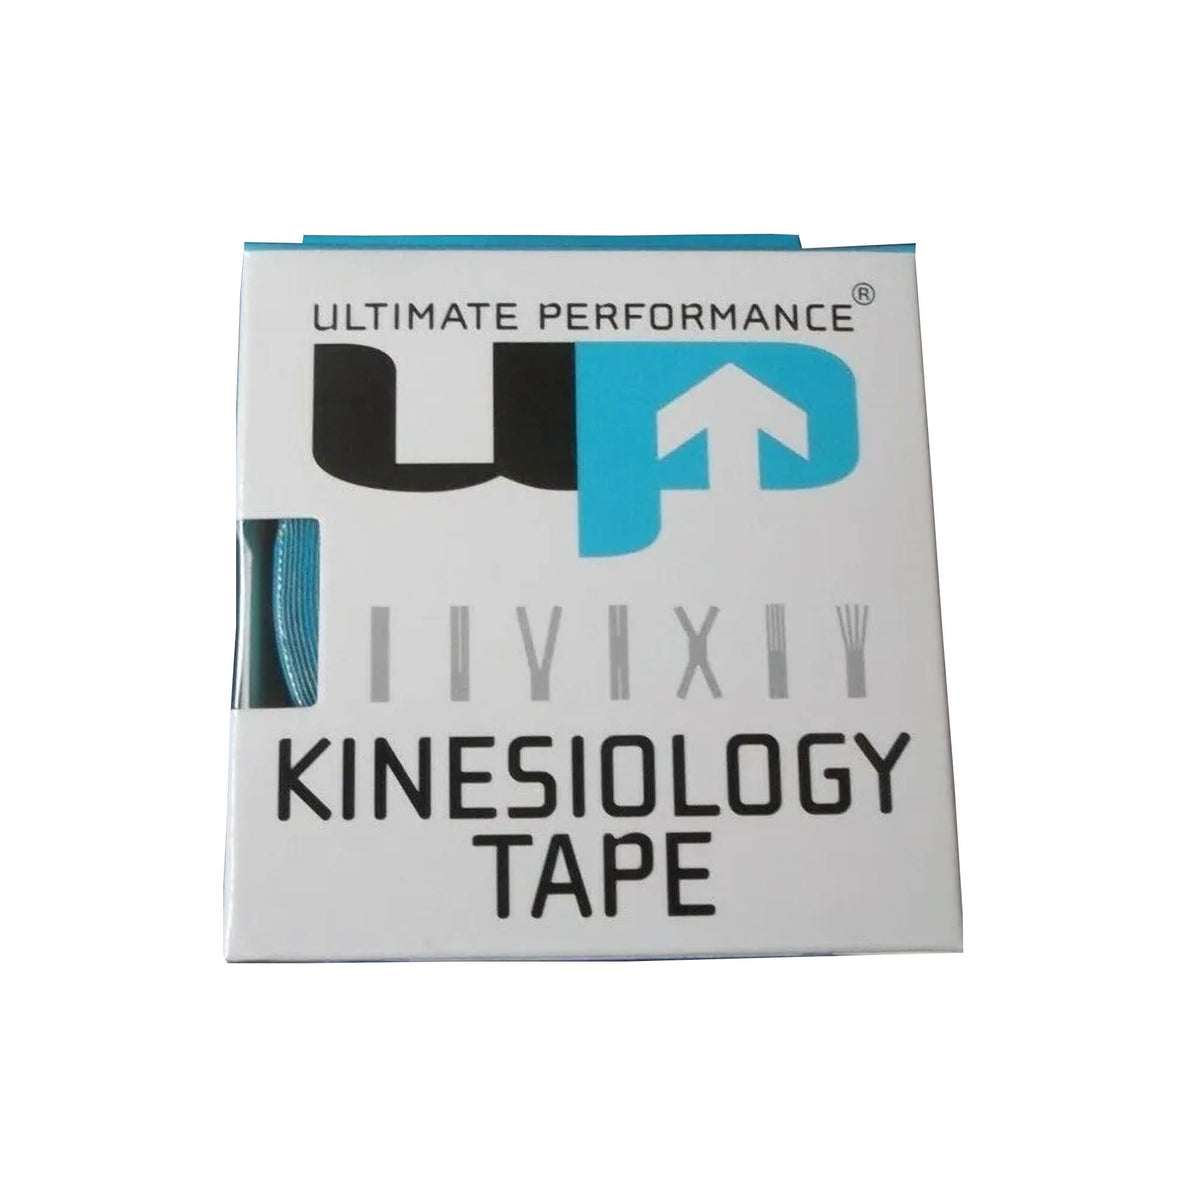 UP Kinesiology Tape